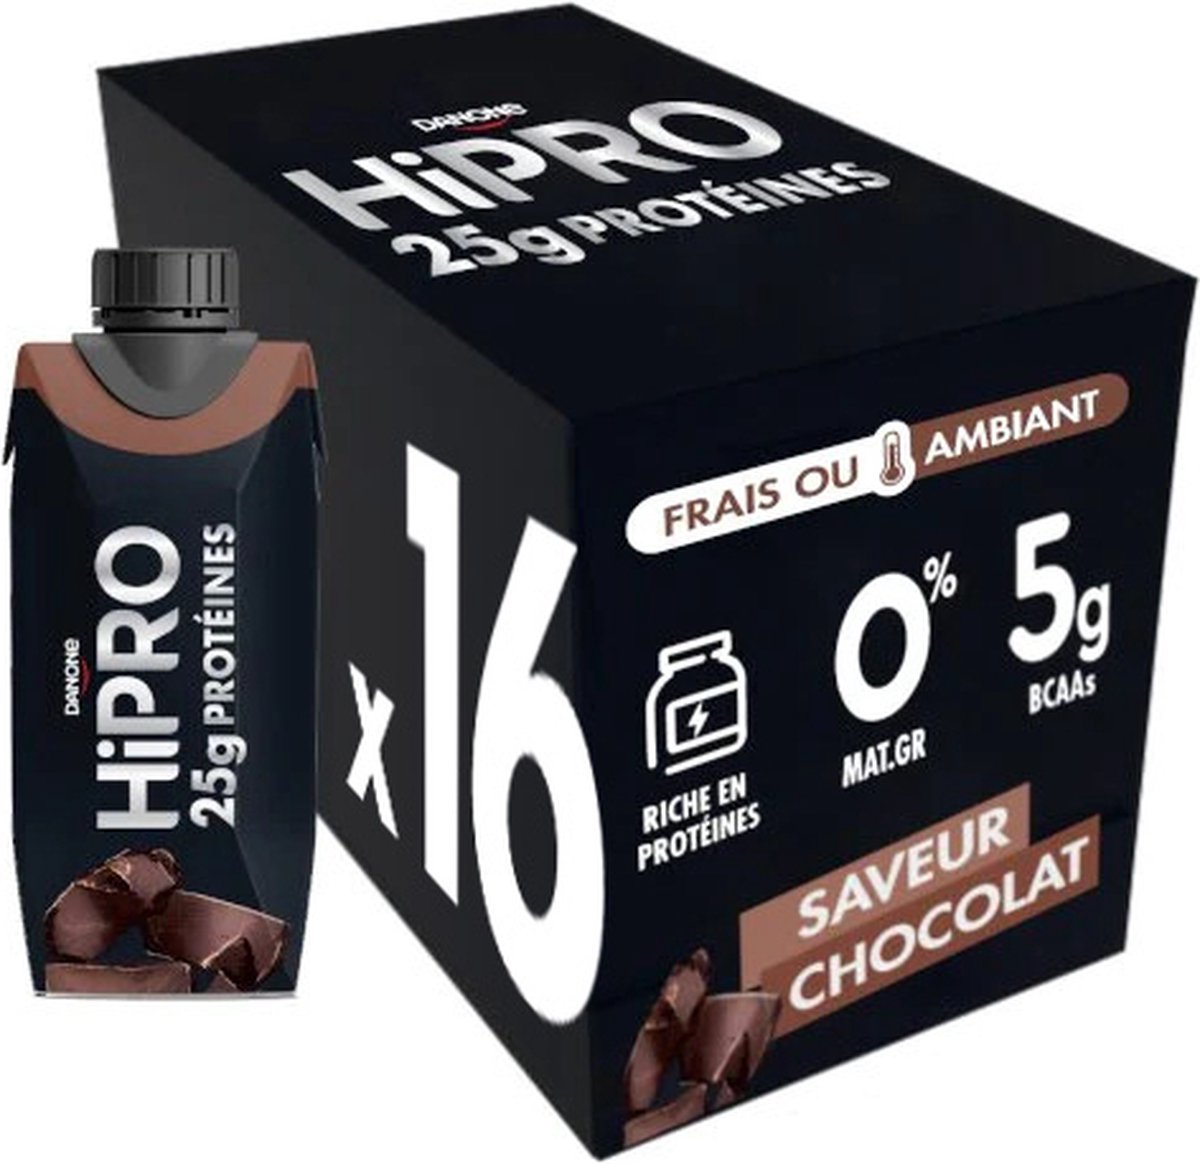 Danone HiPro - Chocolade Proteïne Shake - Eiwitshakes - Sportvoeding - Niet Gekoeld - Pre-Workout - 25g Eiwit - Voordeelverpakking 16 x 330ml